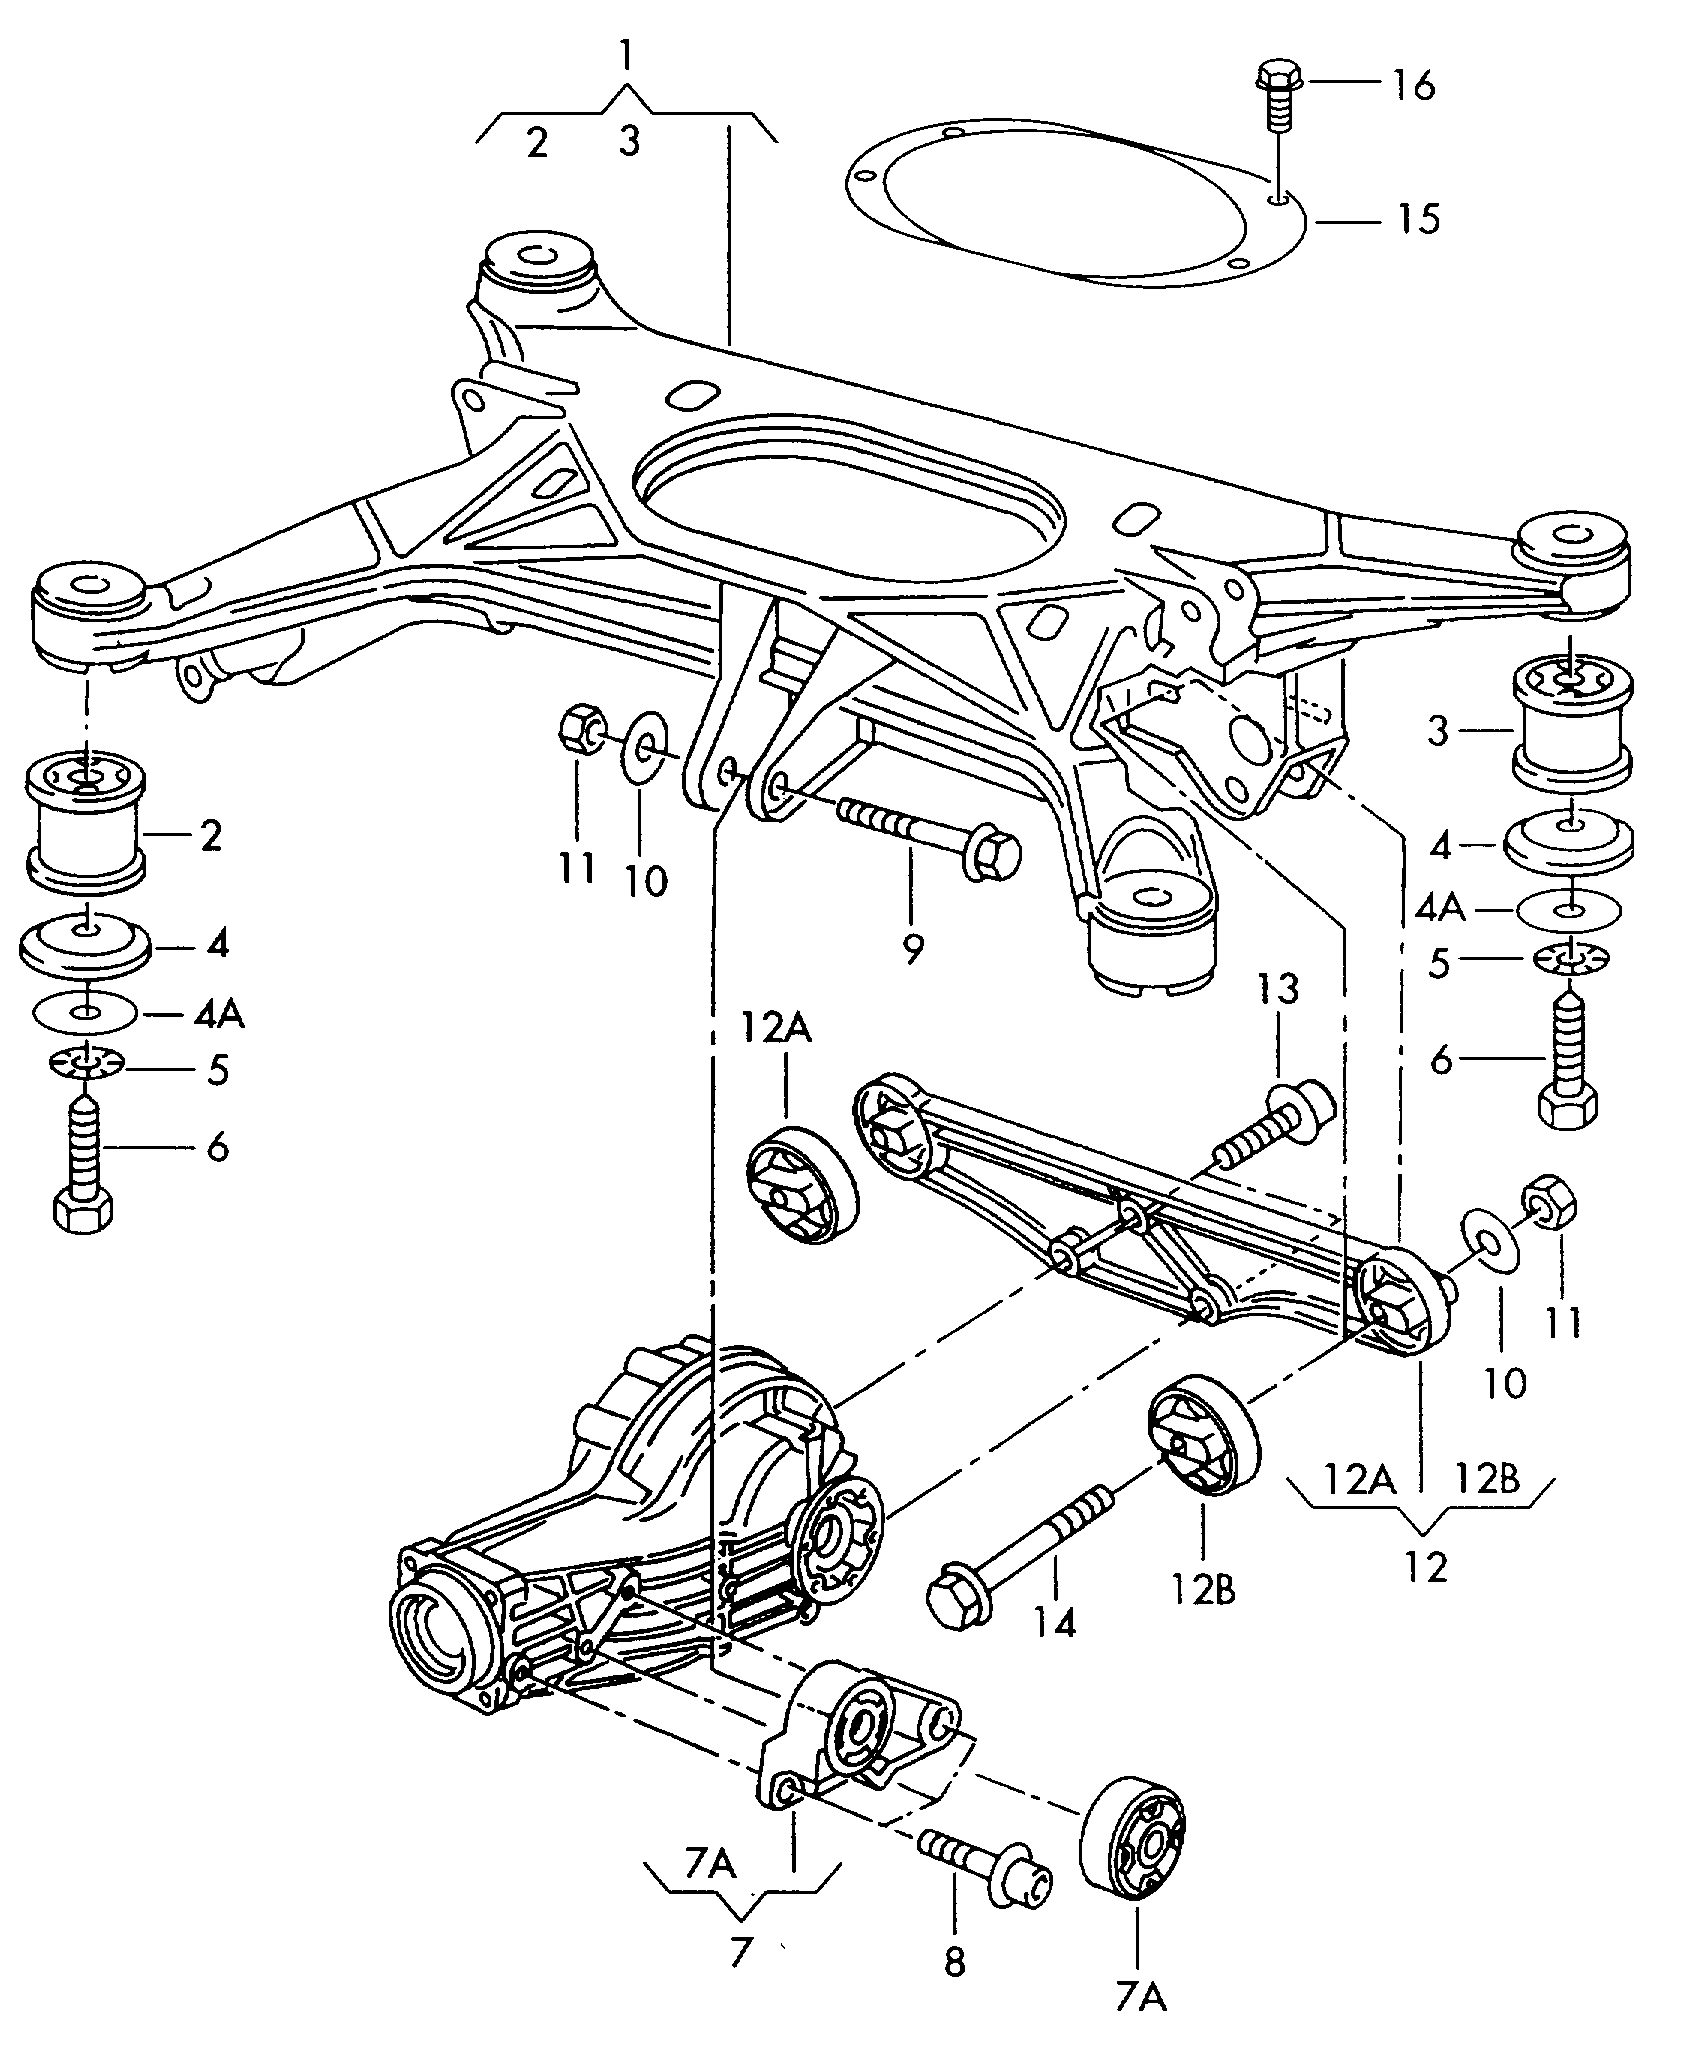 Yardımcı çerçeve - Audi A8/S8 quattro(A8Q)  